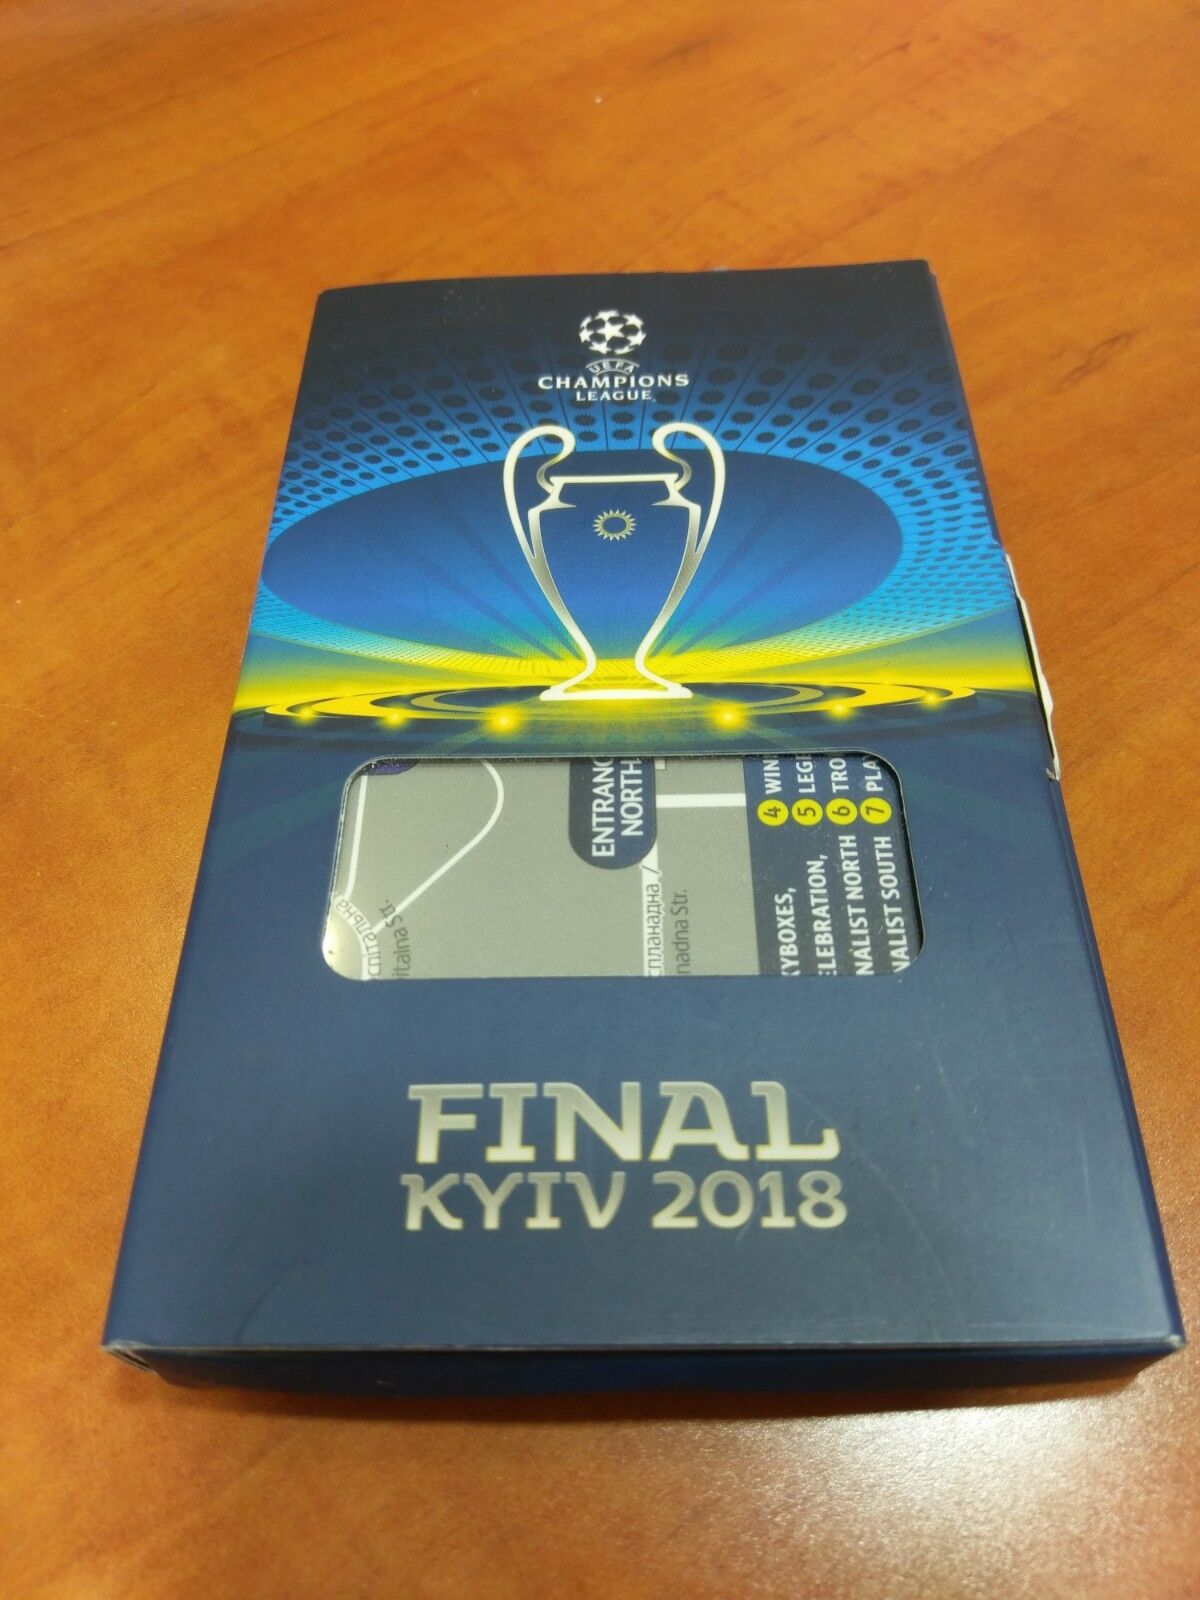 Real Madrid Liverpool 2018 Uefa Champions League Final Hospitality Box Kyiv Kiev